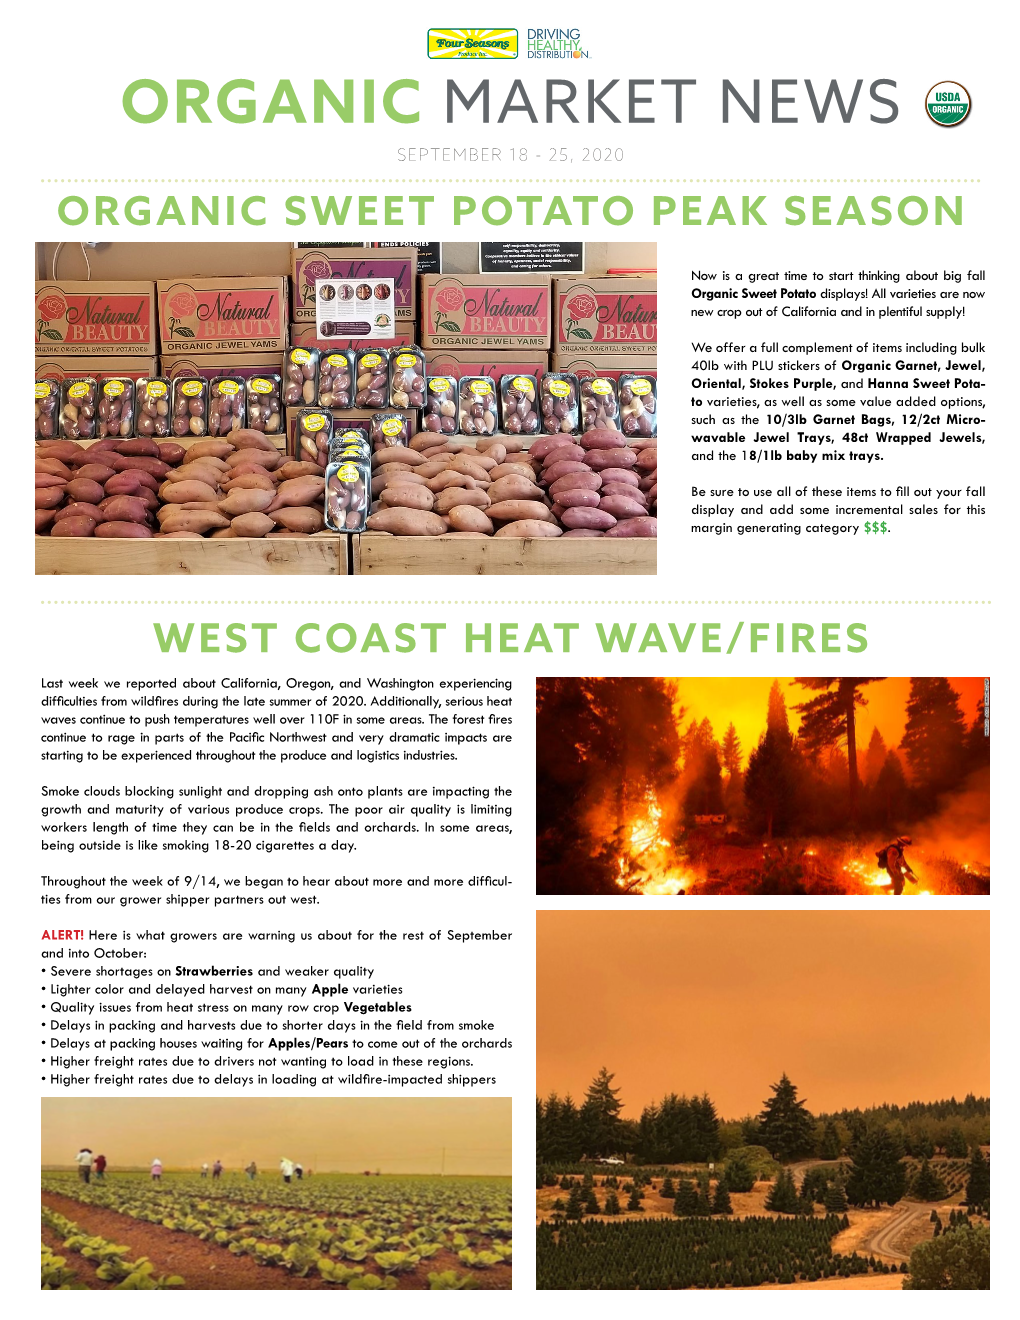 Organic Market News September 18 - 25, 2020 Organic Sweet Potato Peak Season